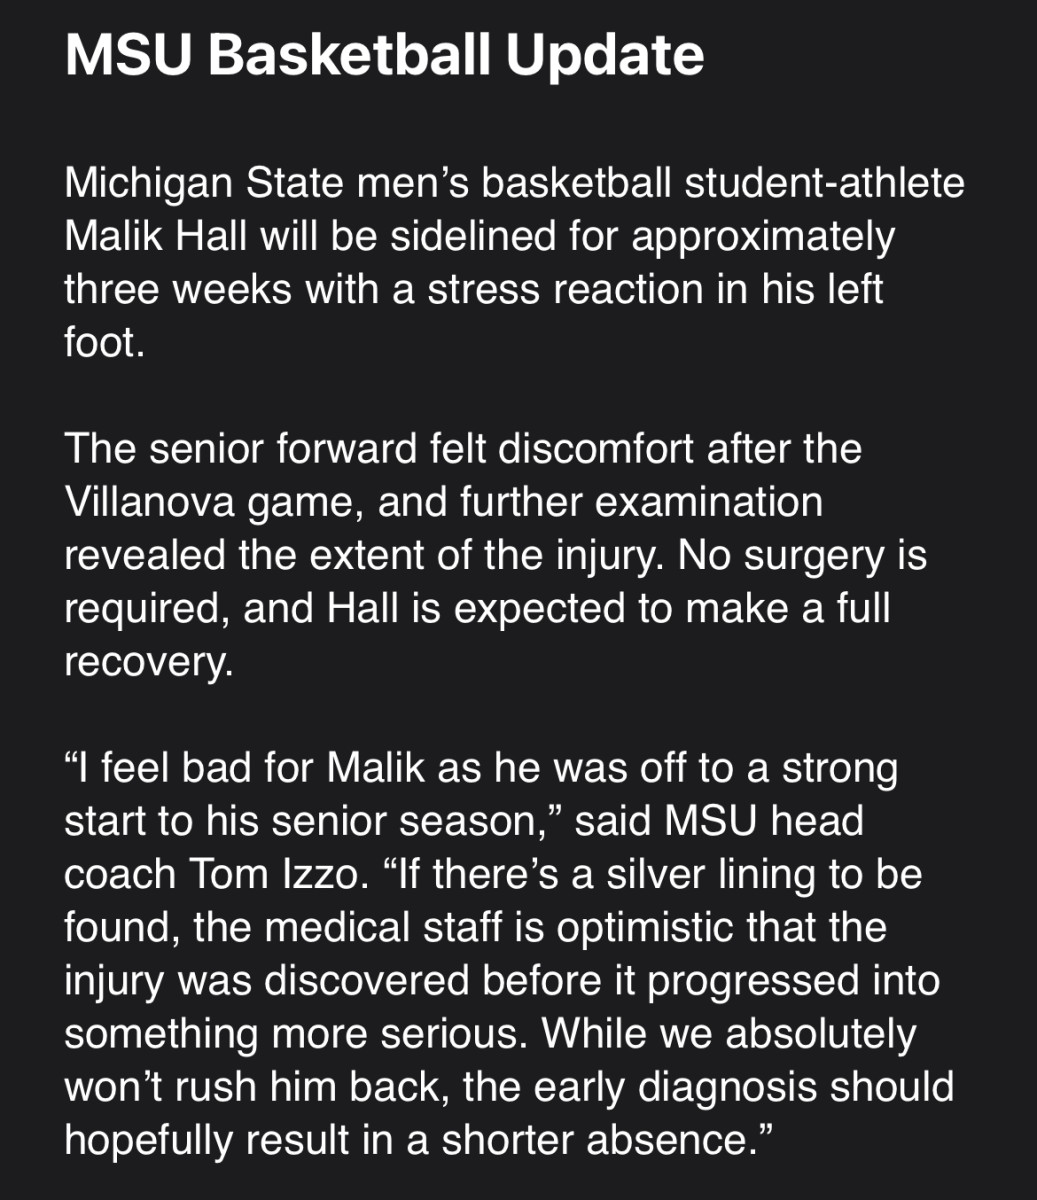 MSU updates Malik Hall’s status